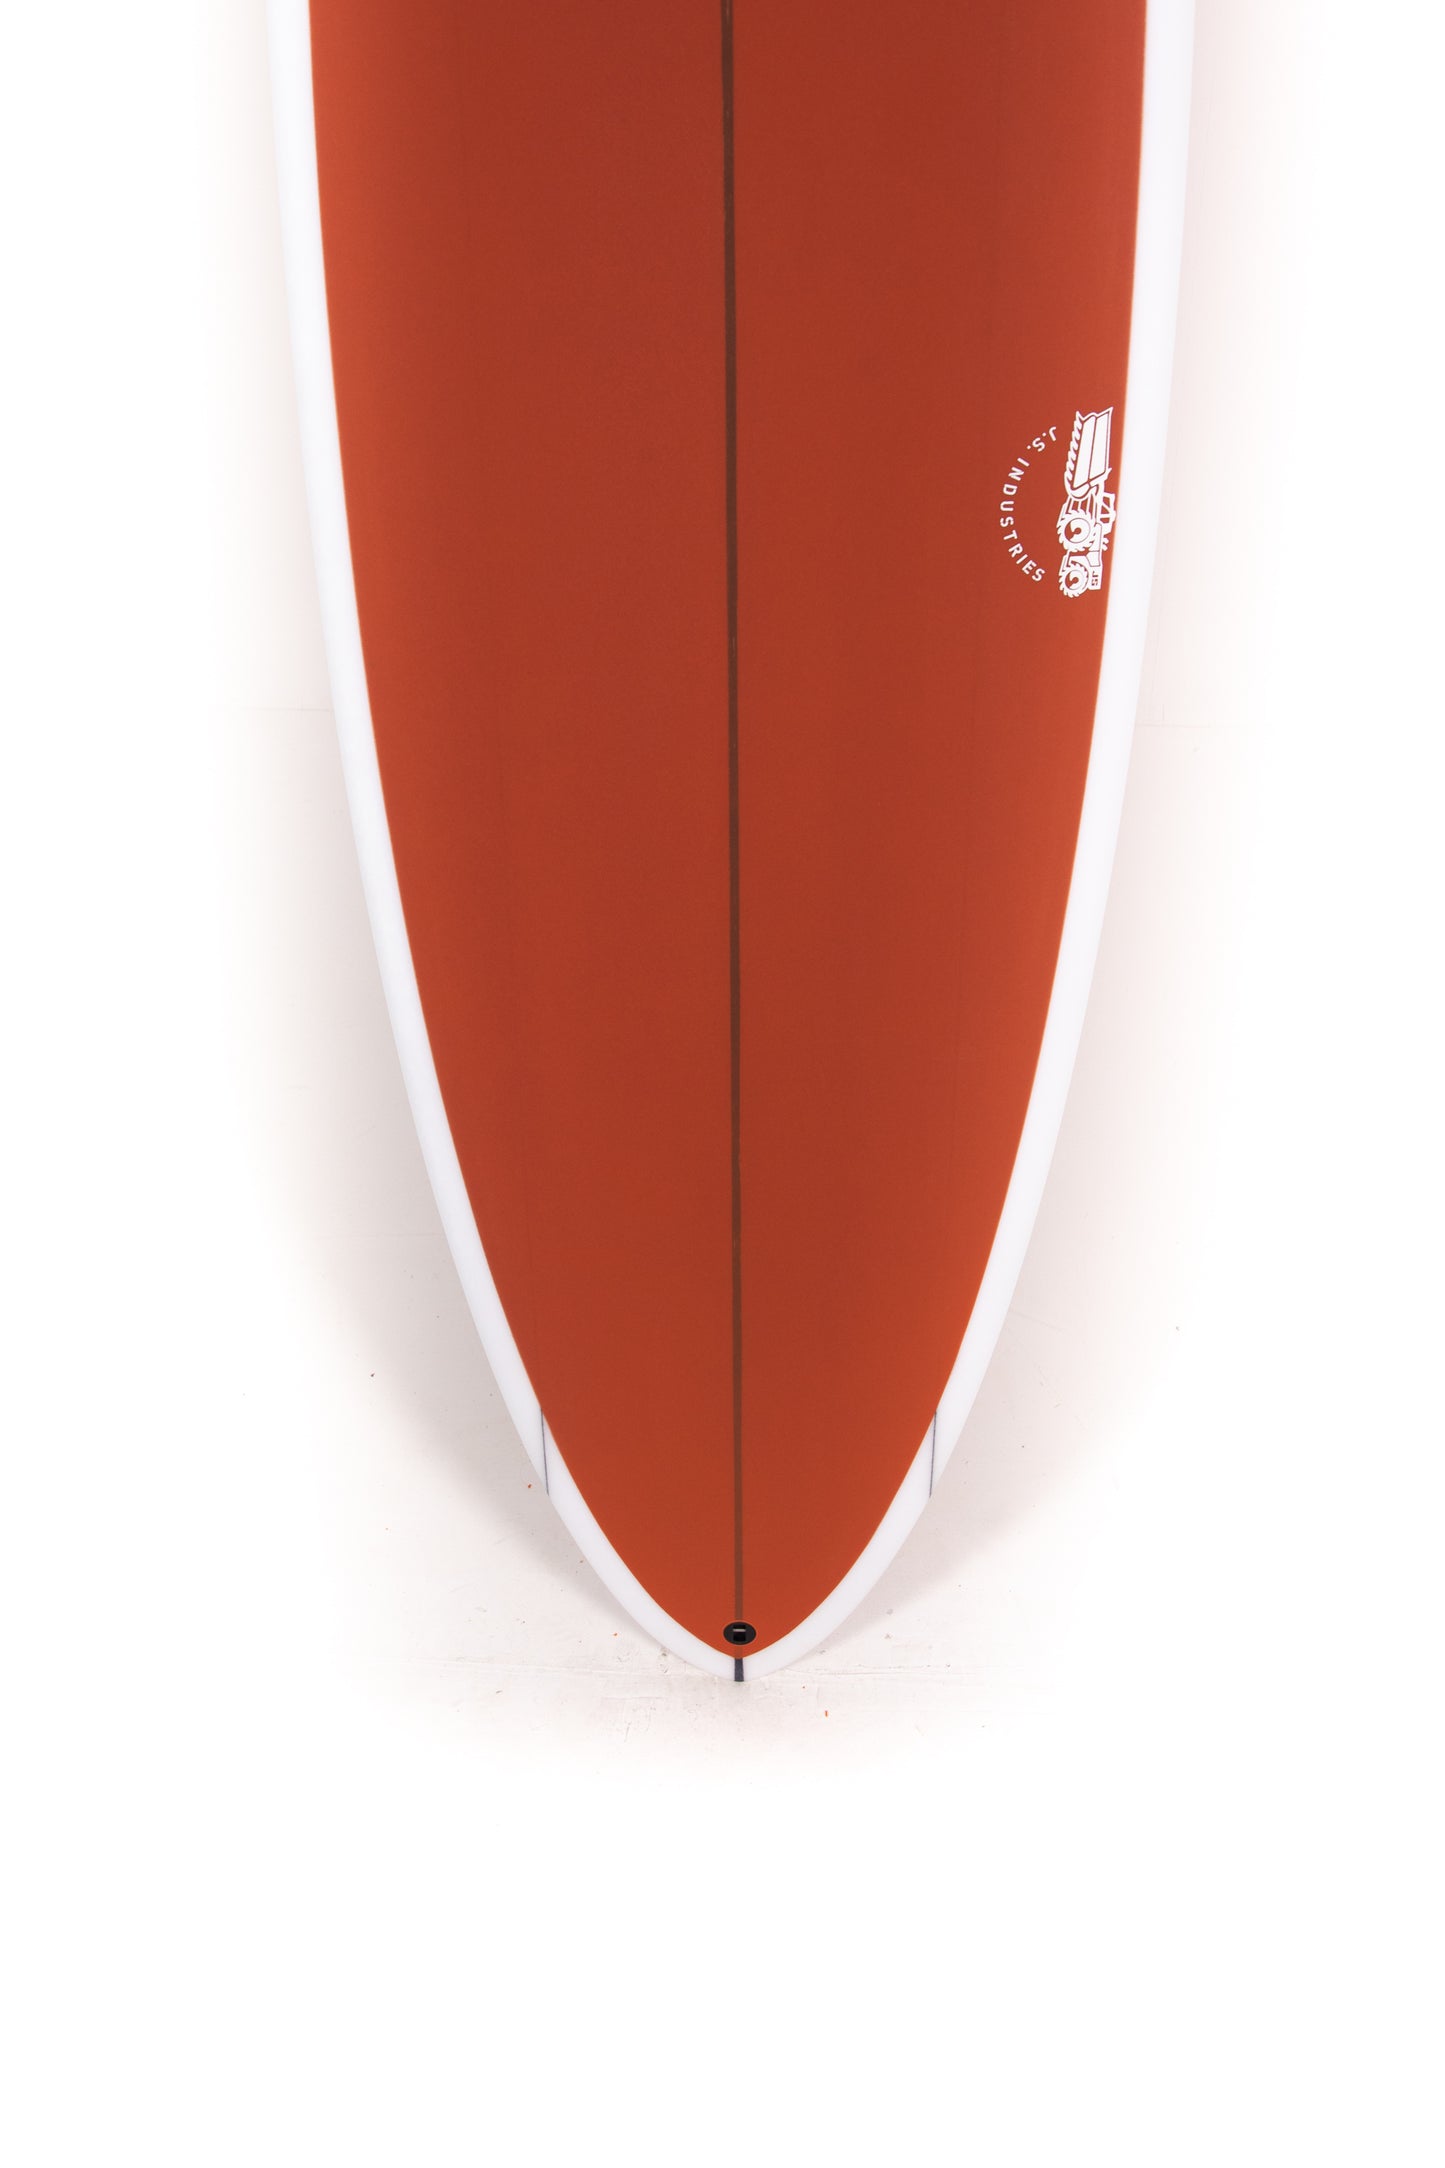 
                  
                    Pukas Surf Shop - JS Surfboards - BIG BARON - 6'2" x 20 x 2 5/8 x 34,4L. - JBBAR62BRUST
                  
                